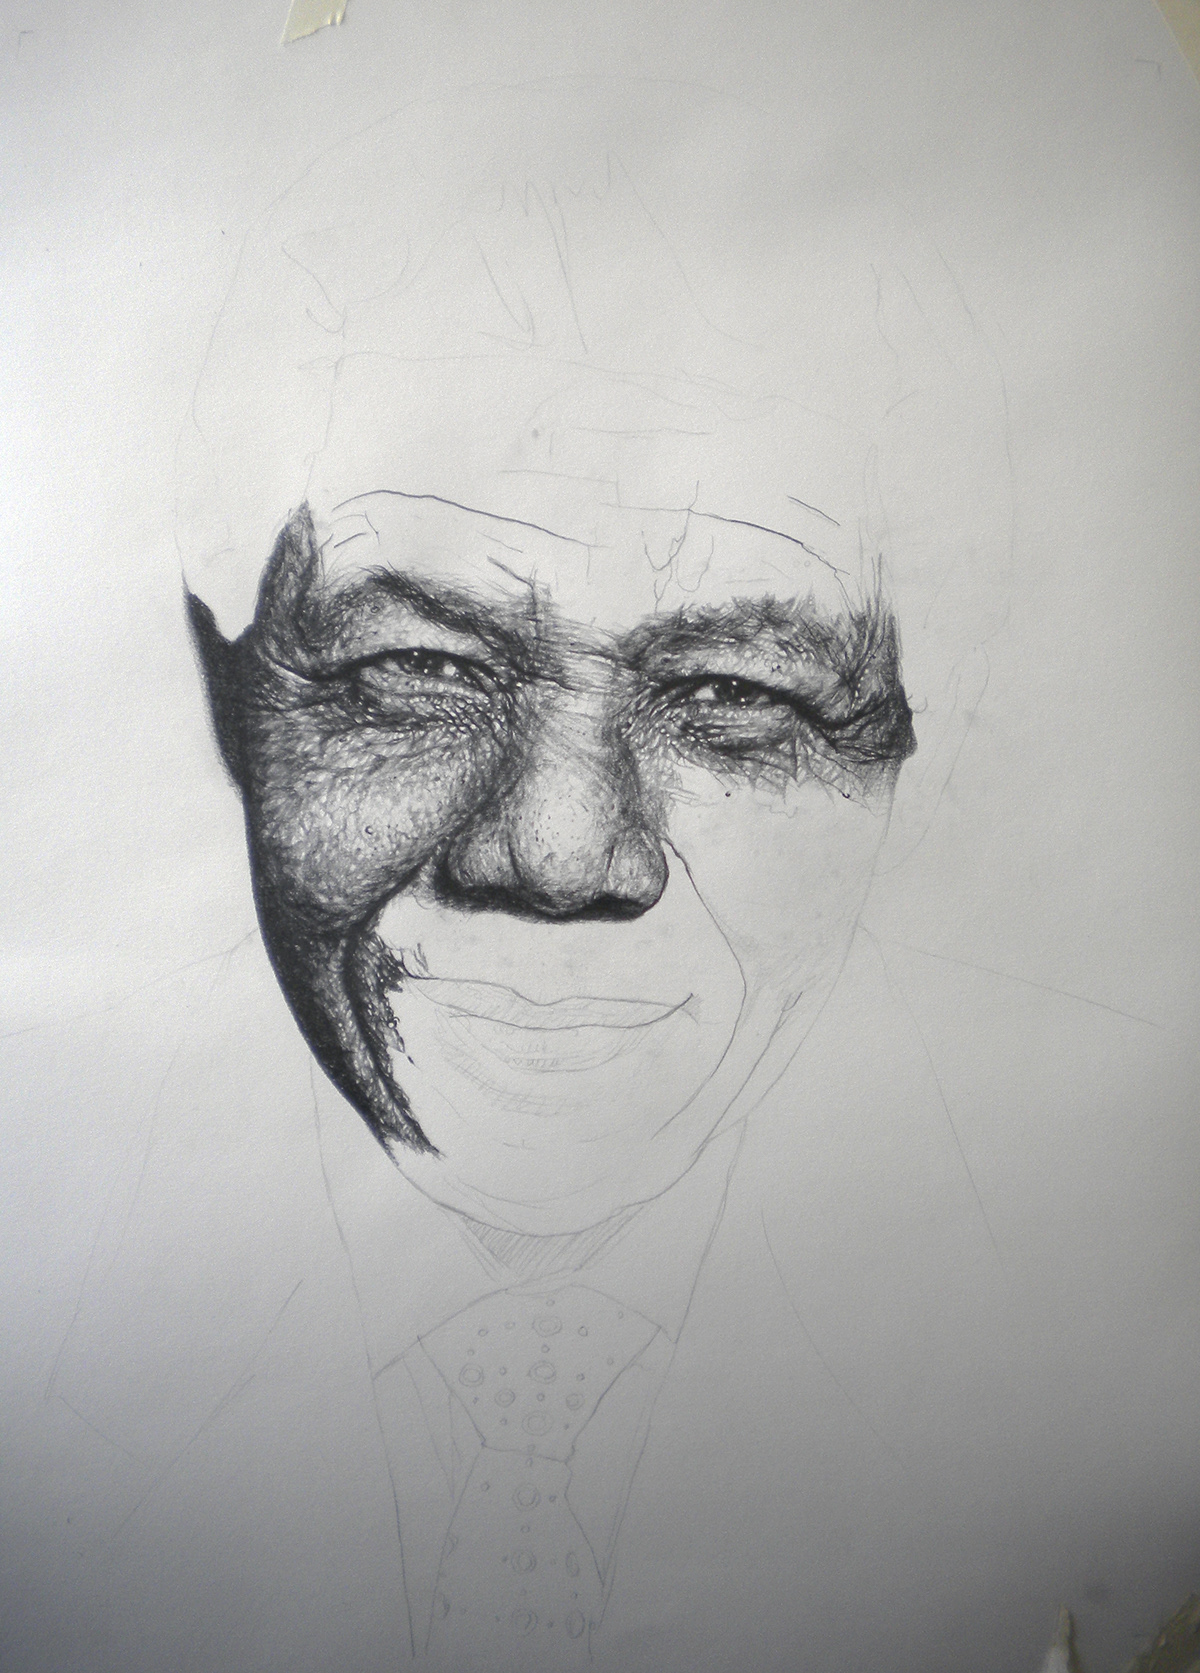 Nelson Mandela madiba portrait